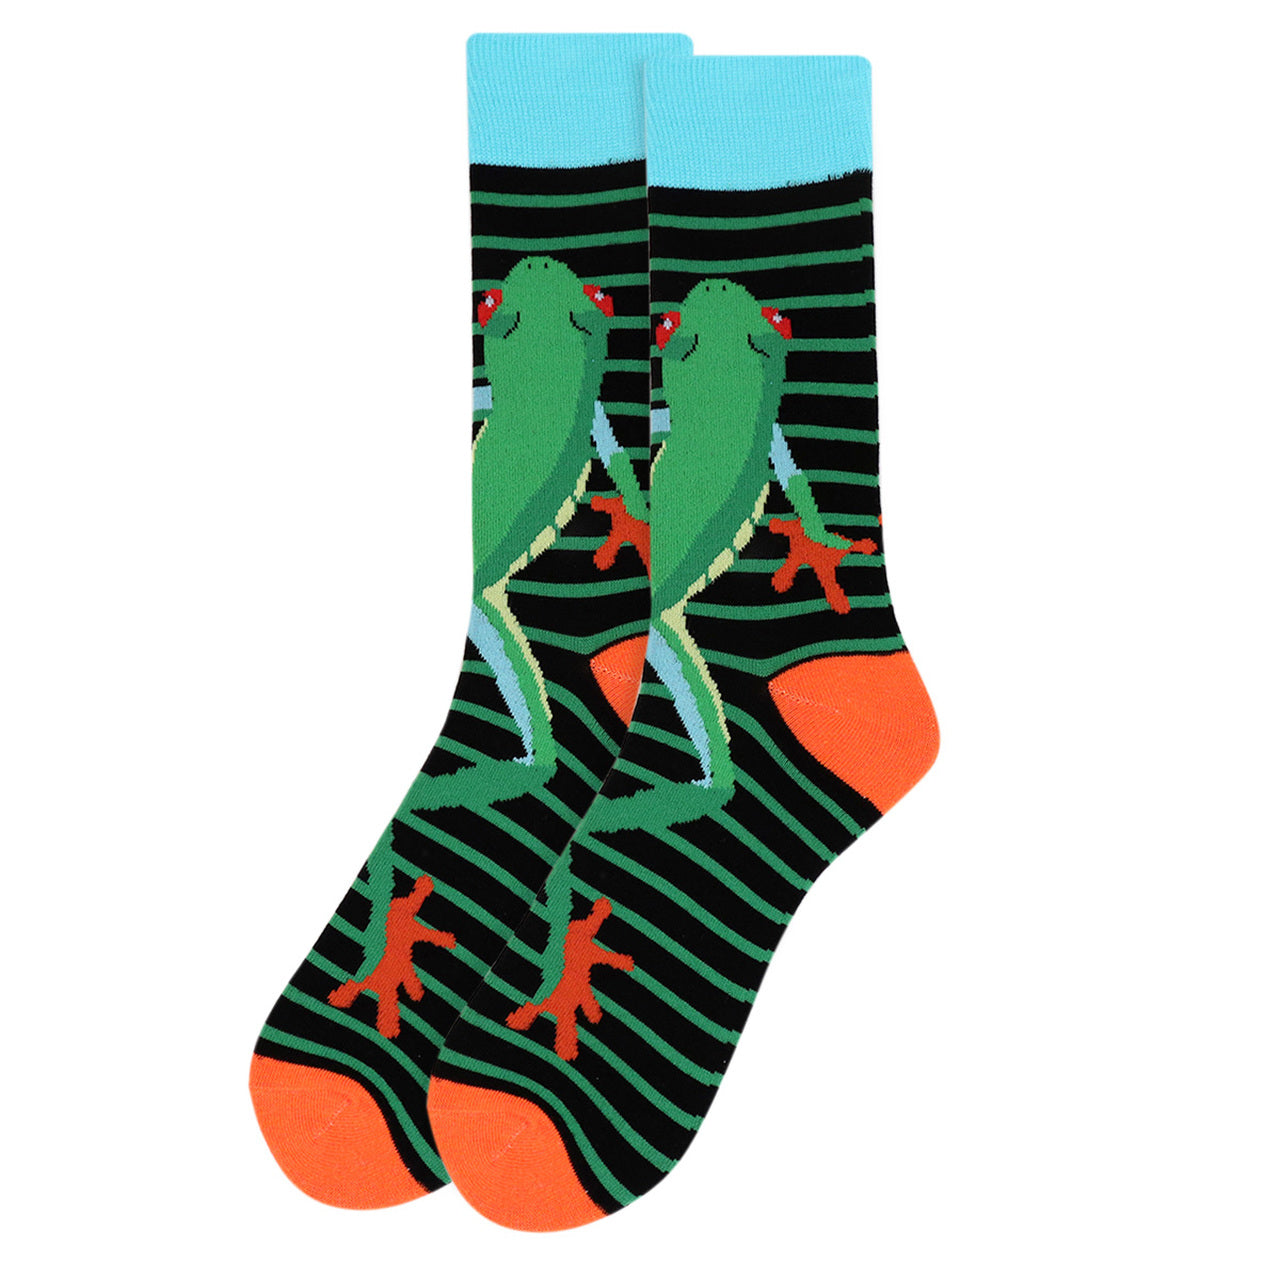 Men's Frog and Striped Print Crew Socks